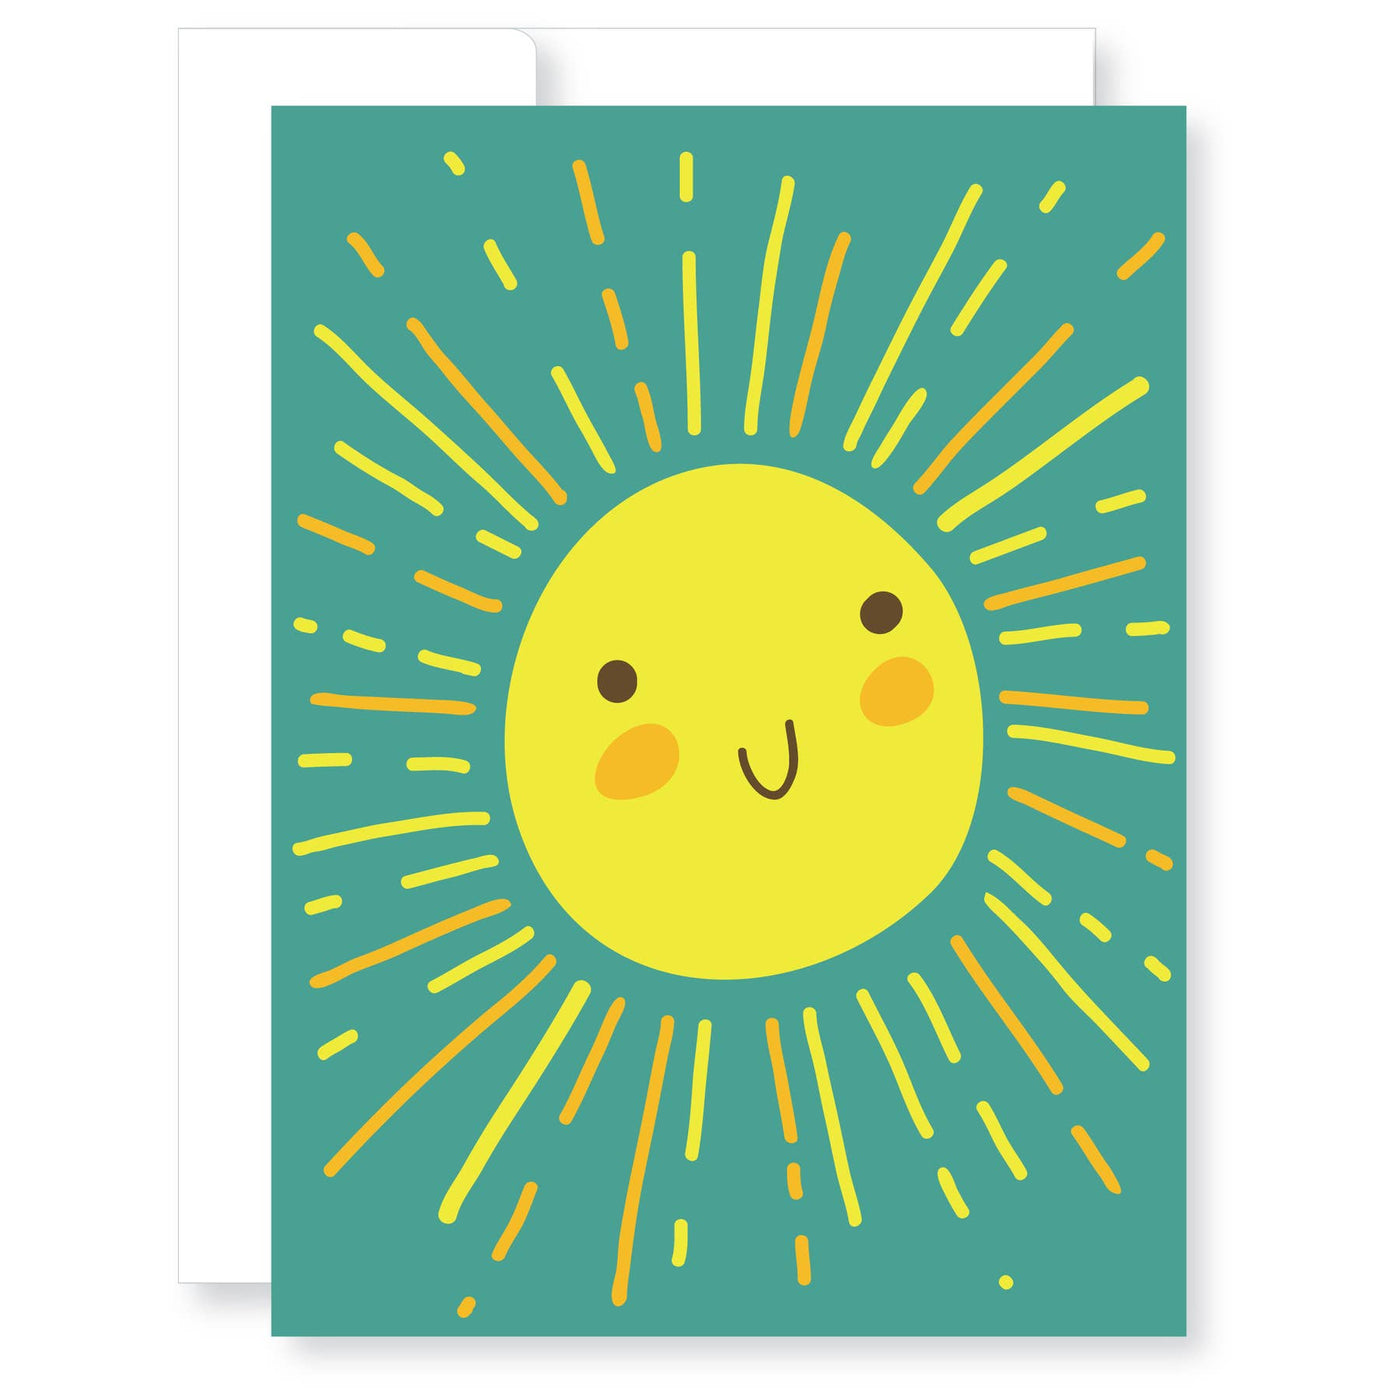 Sunny Days Ahead Greeting Card